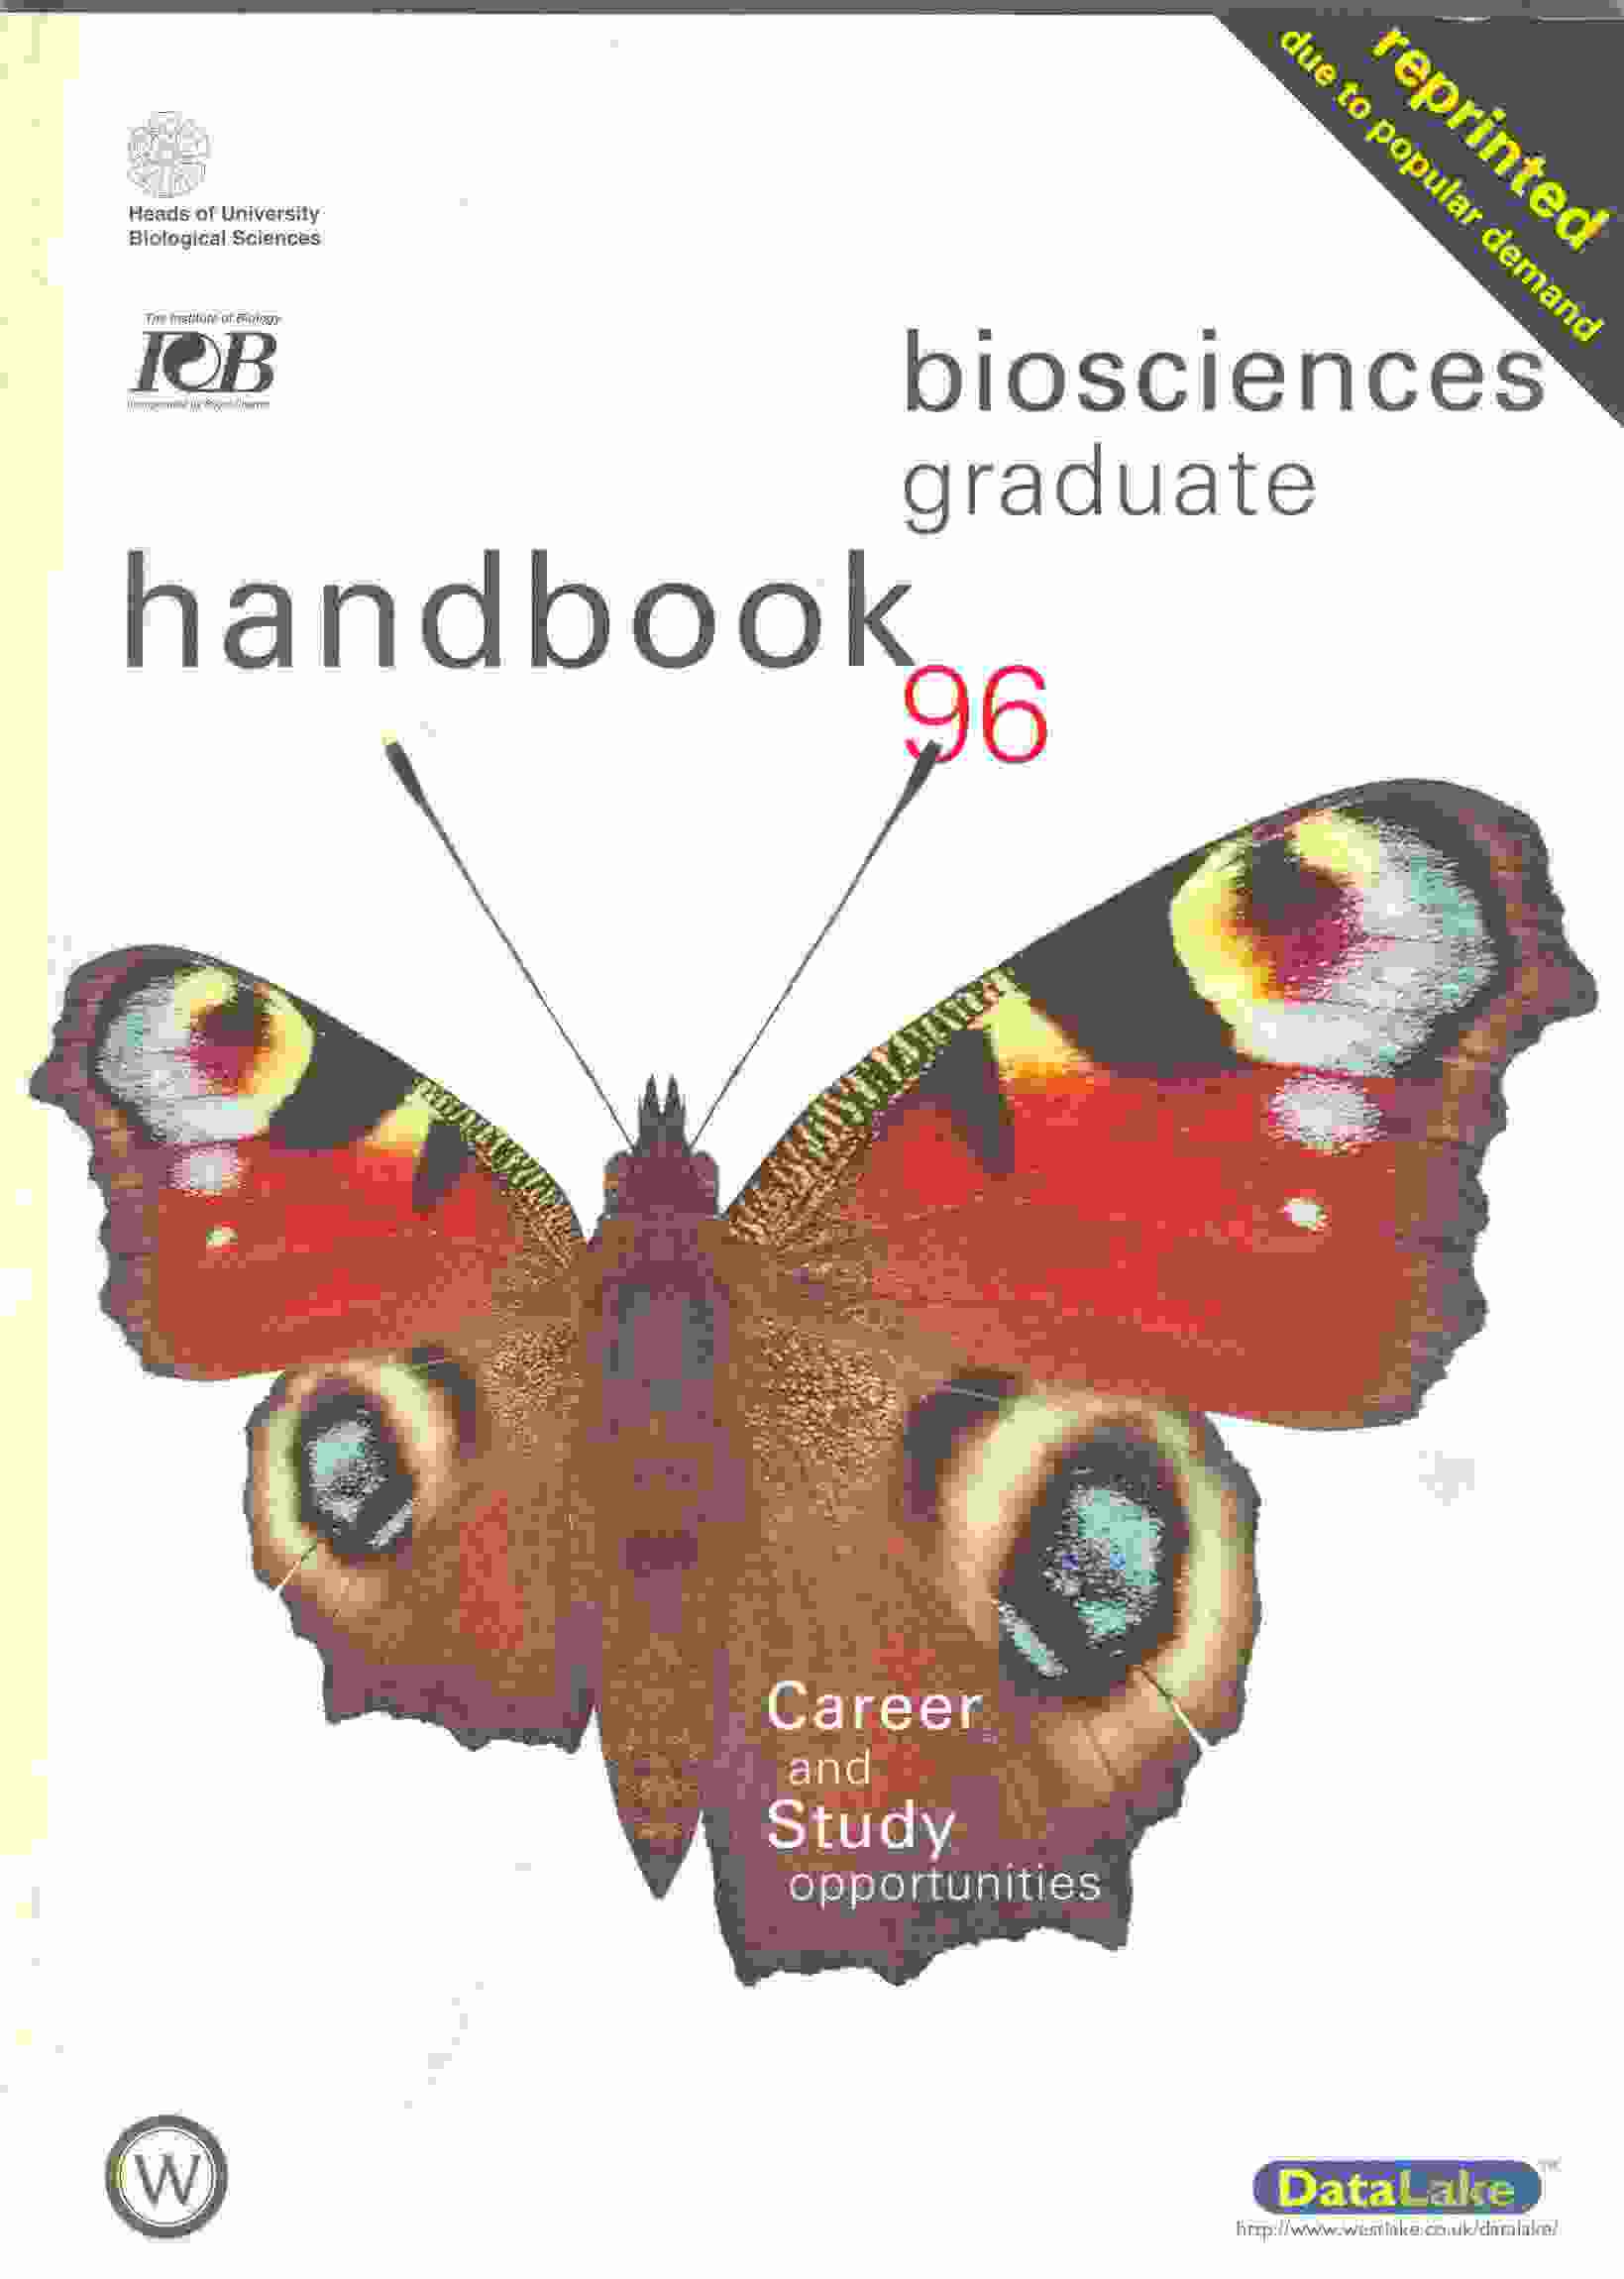 Postgraduate biology